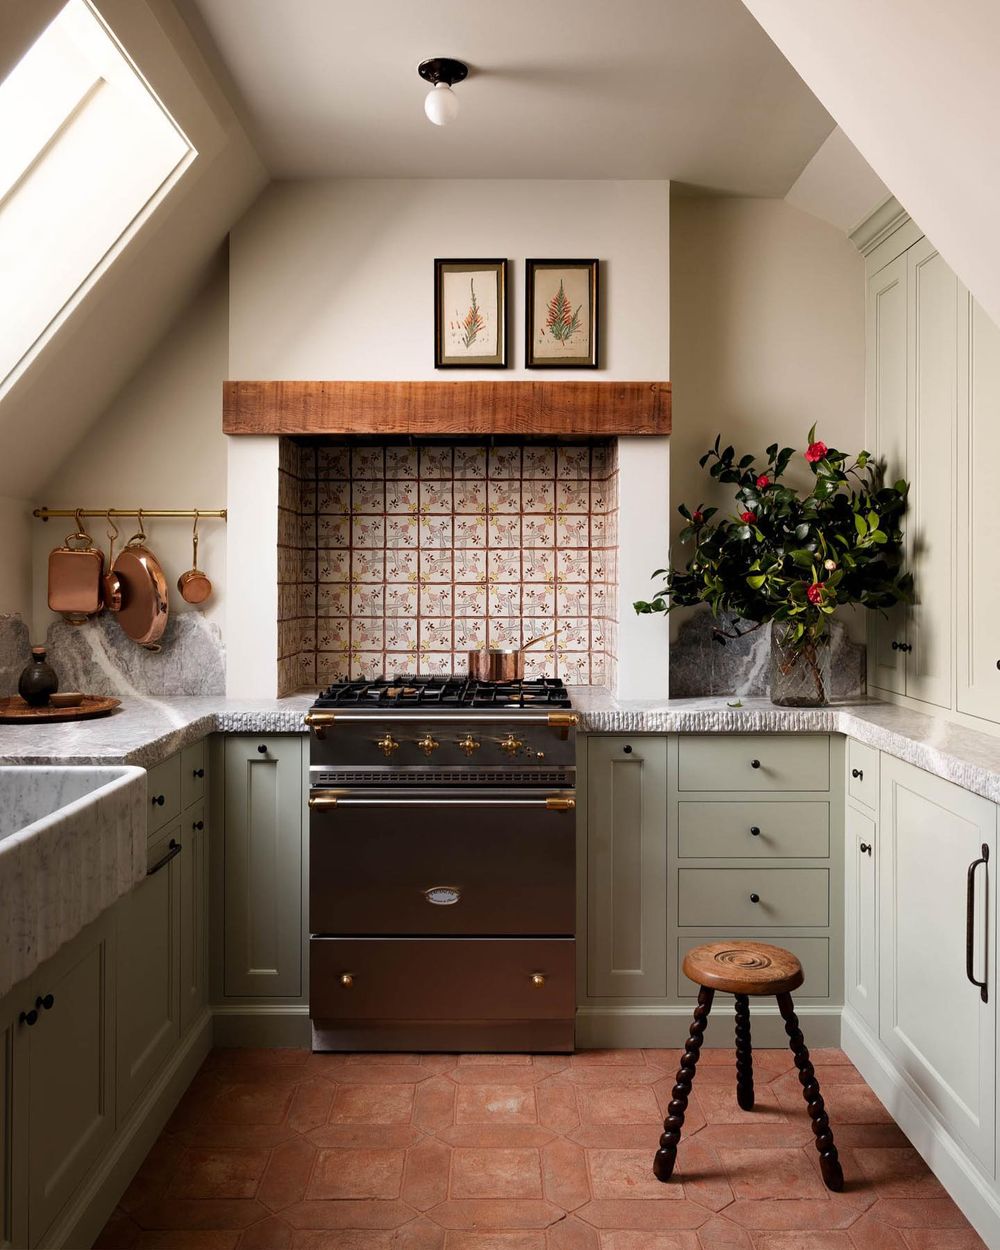 Small kitchen traditional design heidicaillierdesign